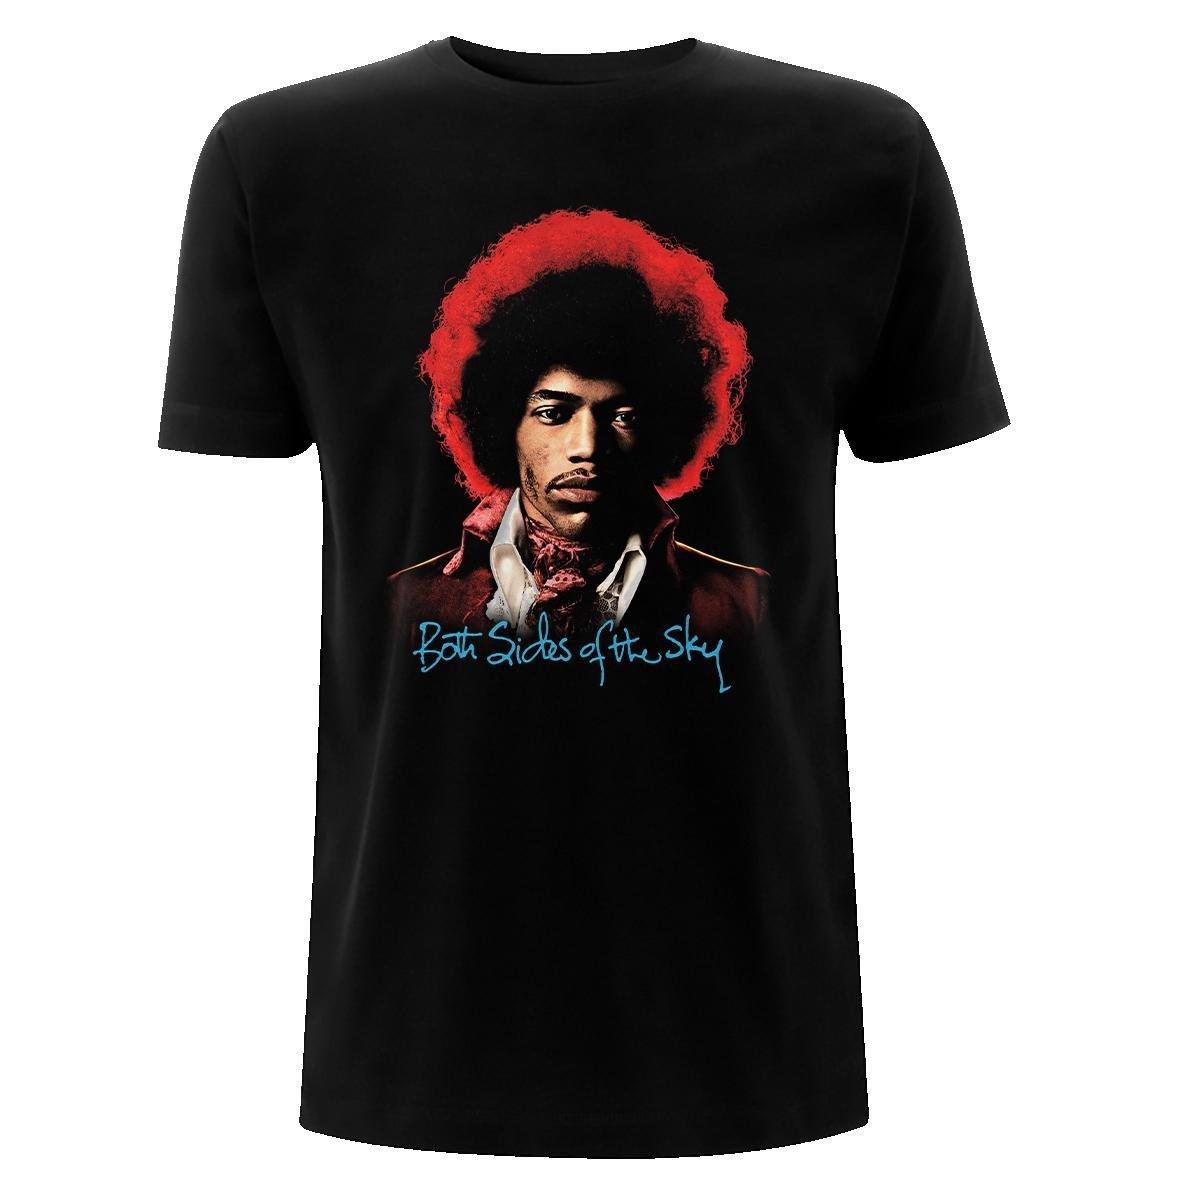 Both Sides Of The Sky Tshirt Damen Schwarz XL von Jimi Hendrix